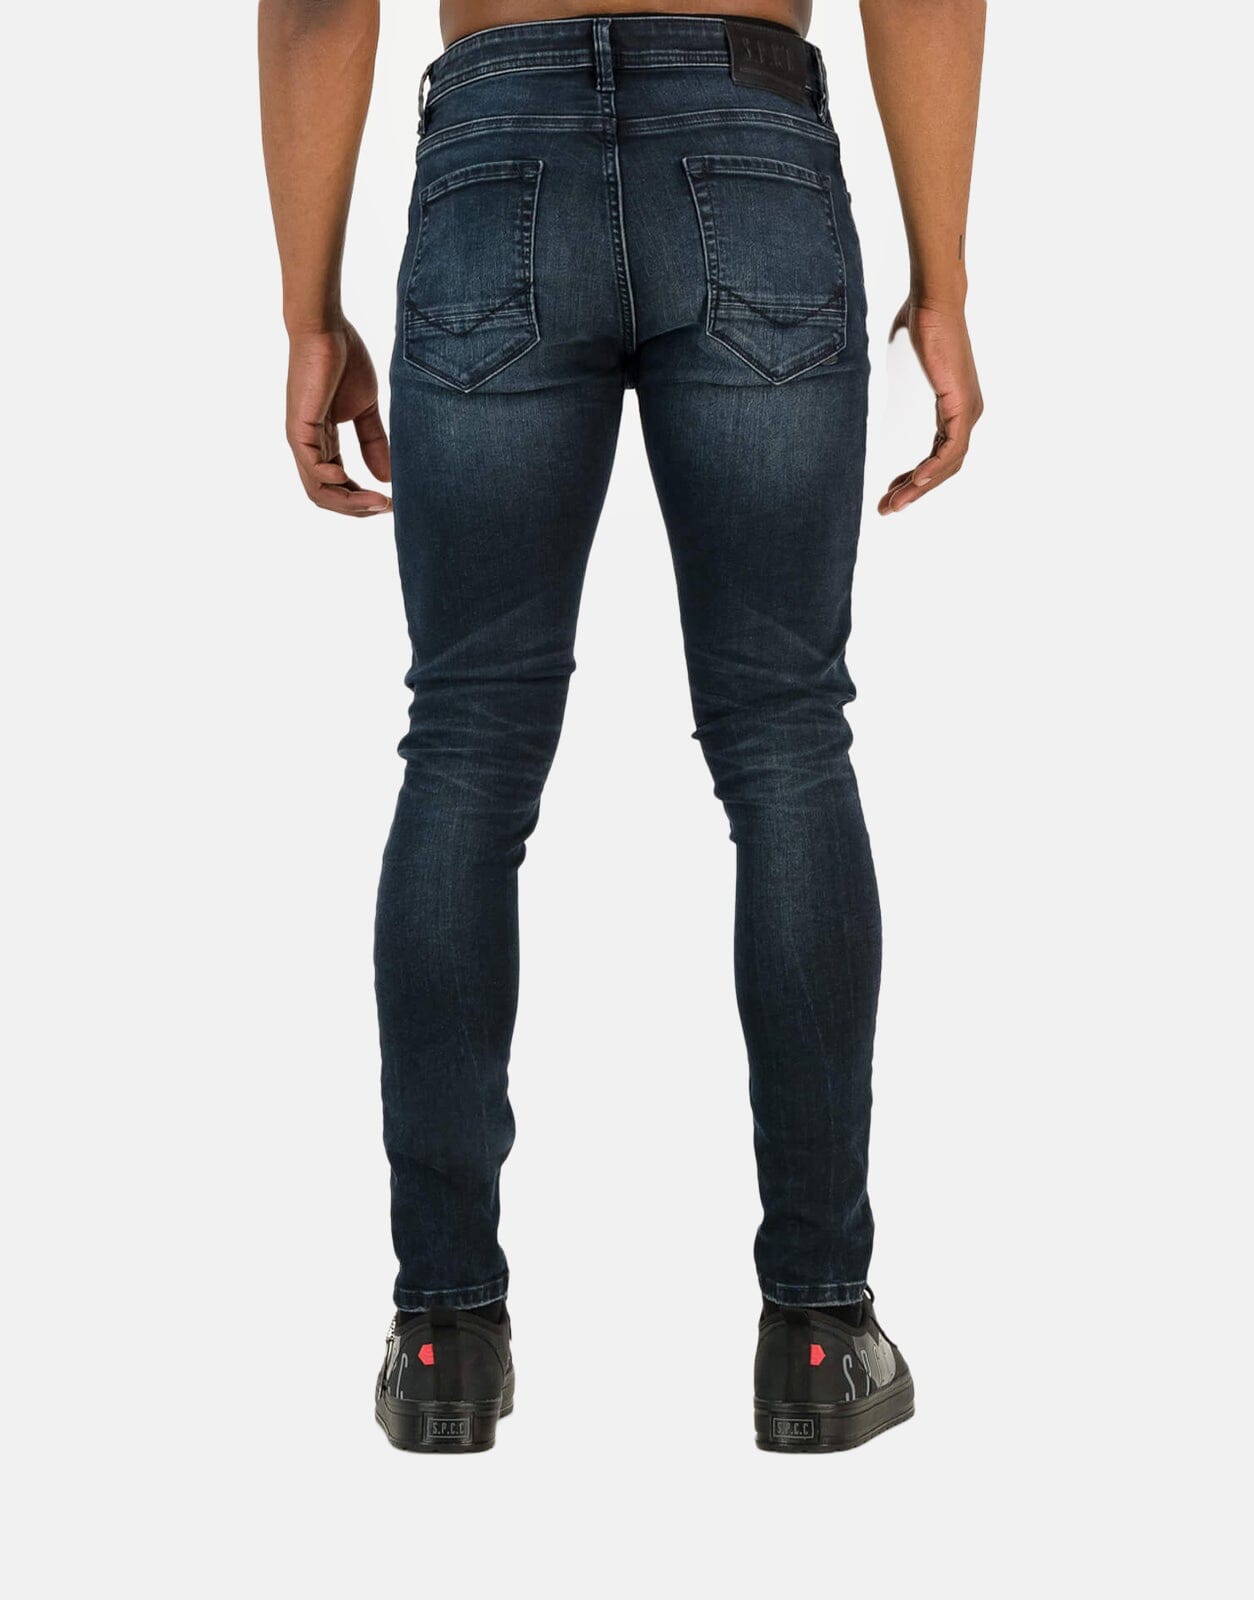 SPCC Osiris Jeans - Subwear